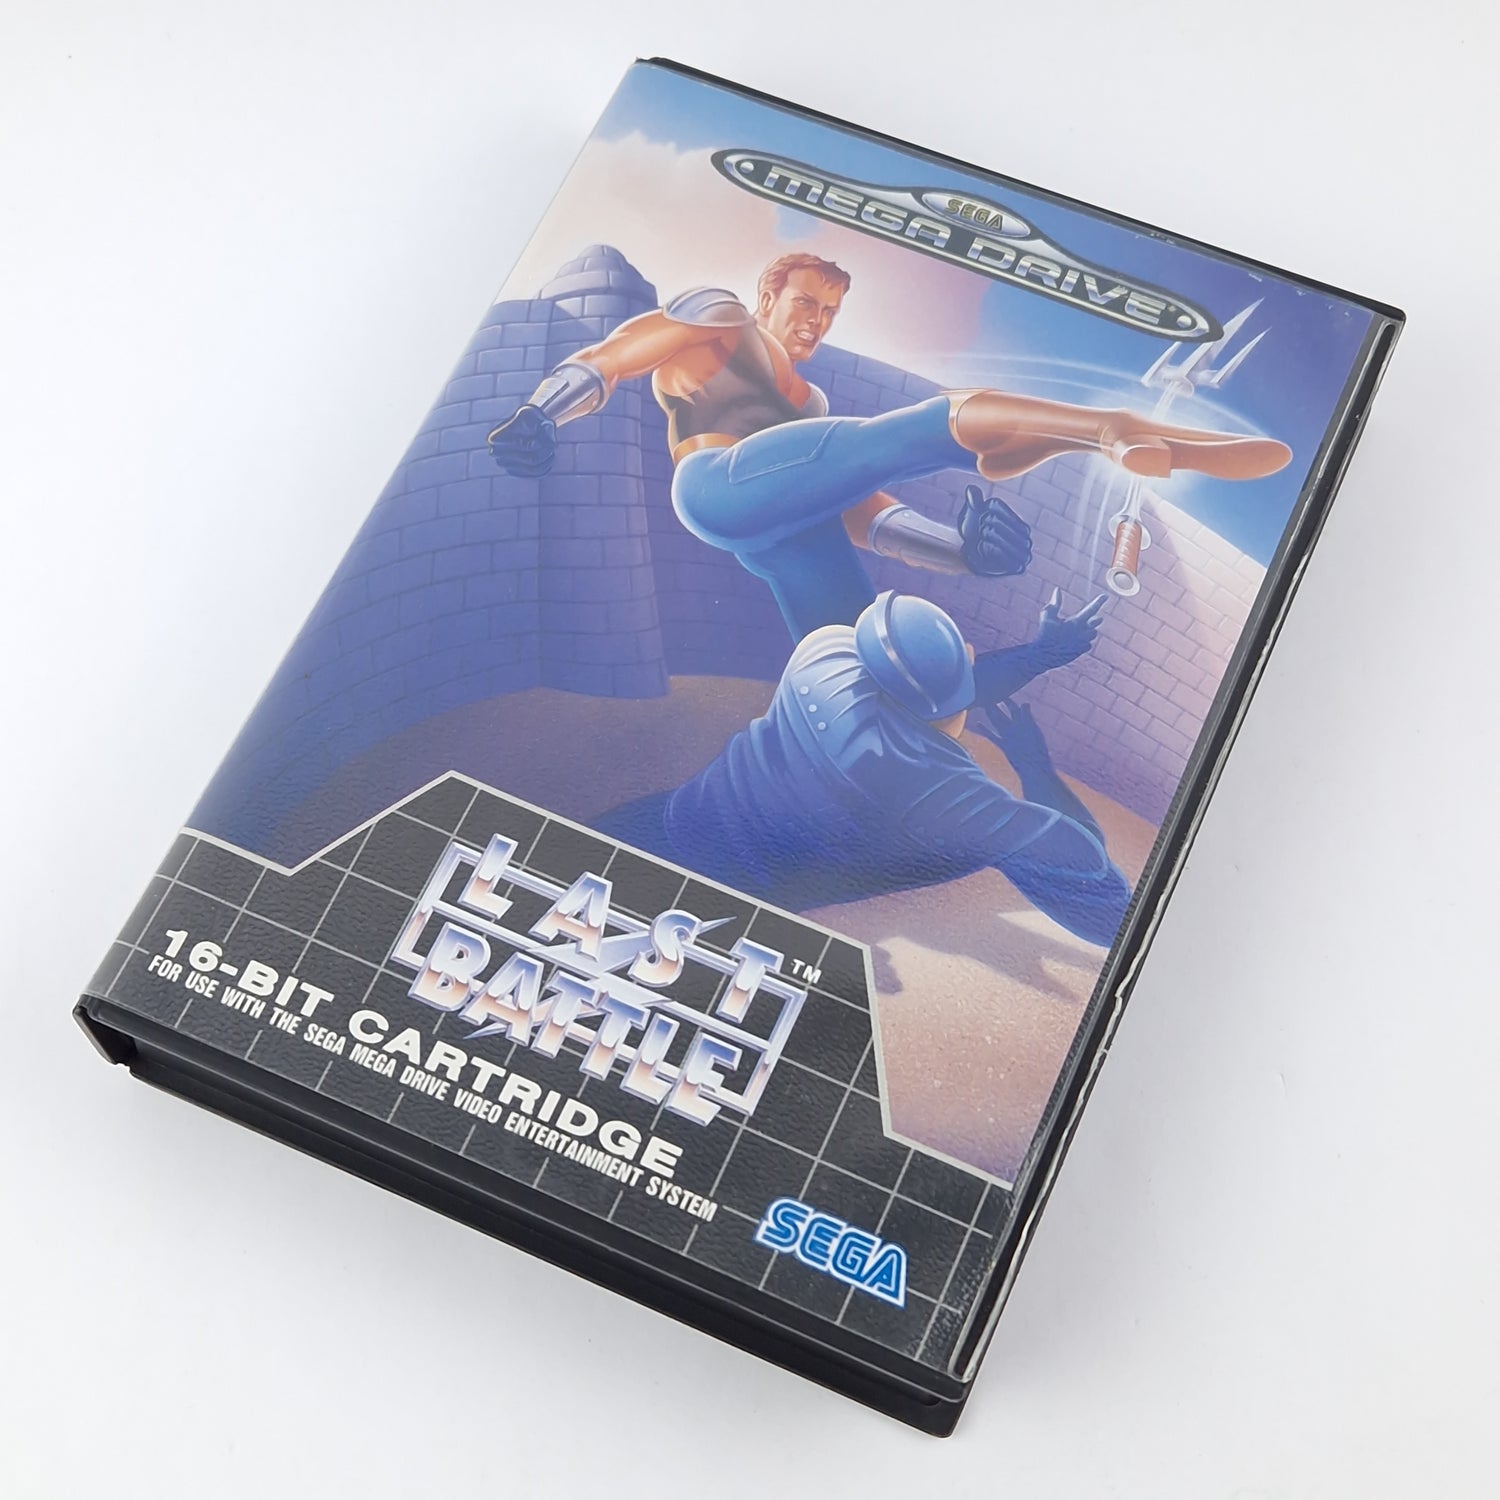 Sega Mega Drive Game: Last Battle - Module Instructions OVP cib / MD PAL Game